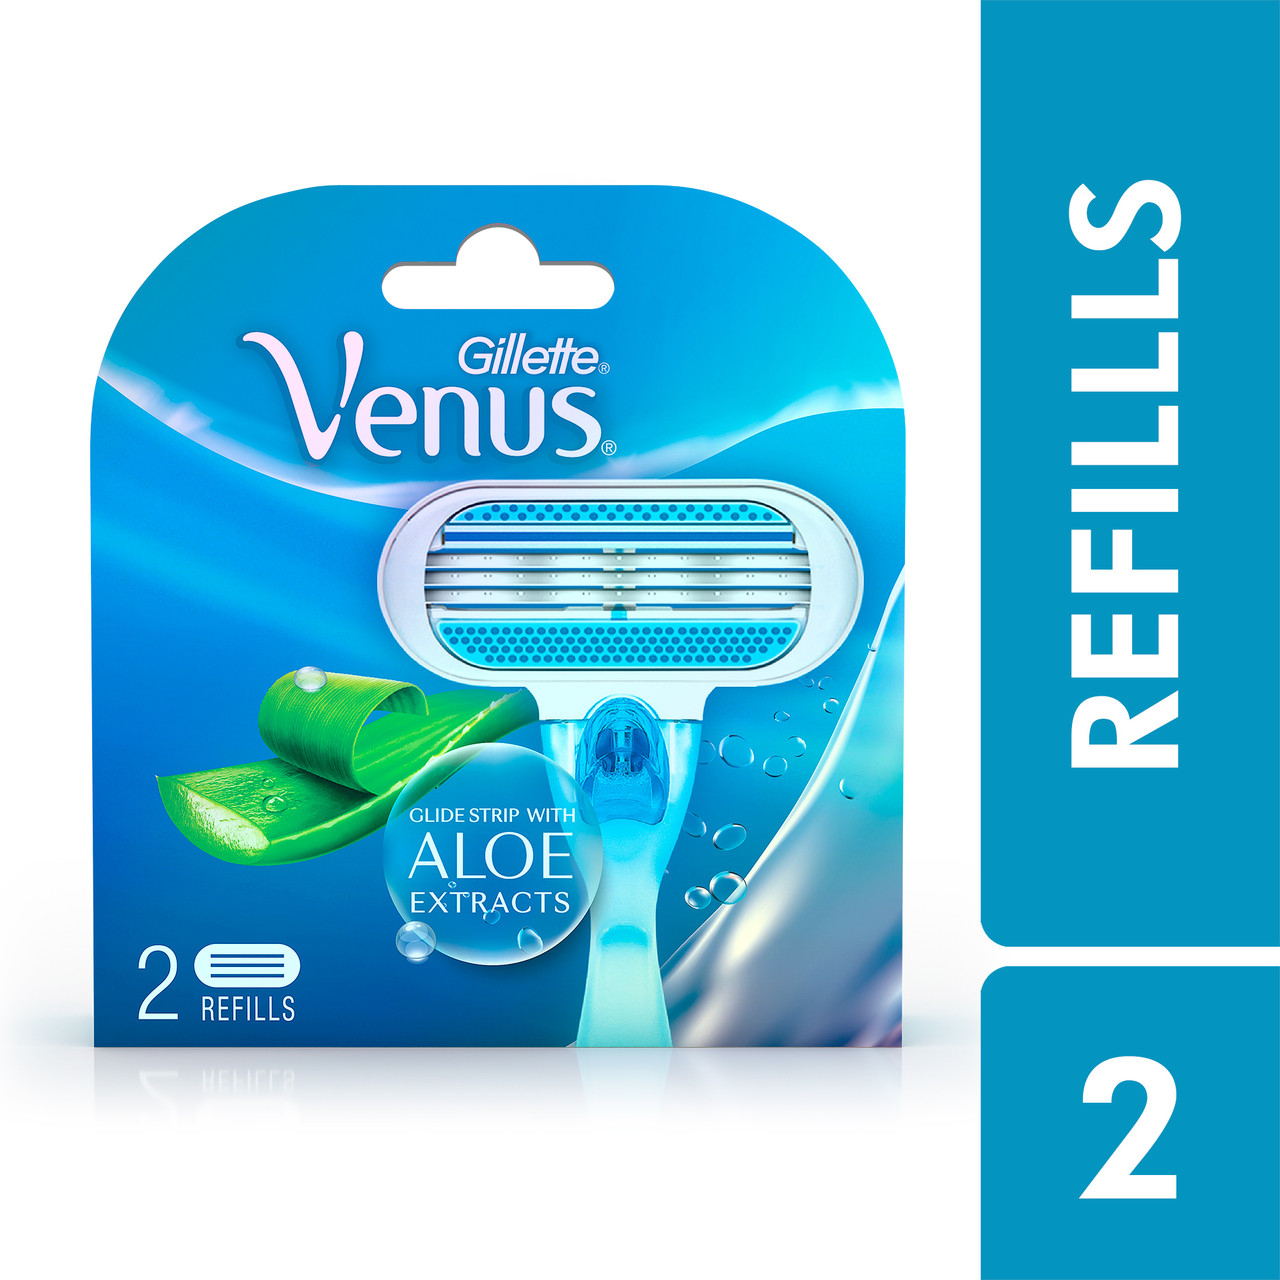 Venus Hair Removal Razor Refills for Women - 2 pieces